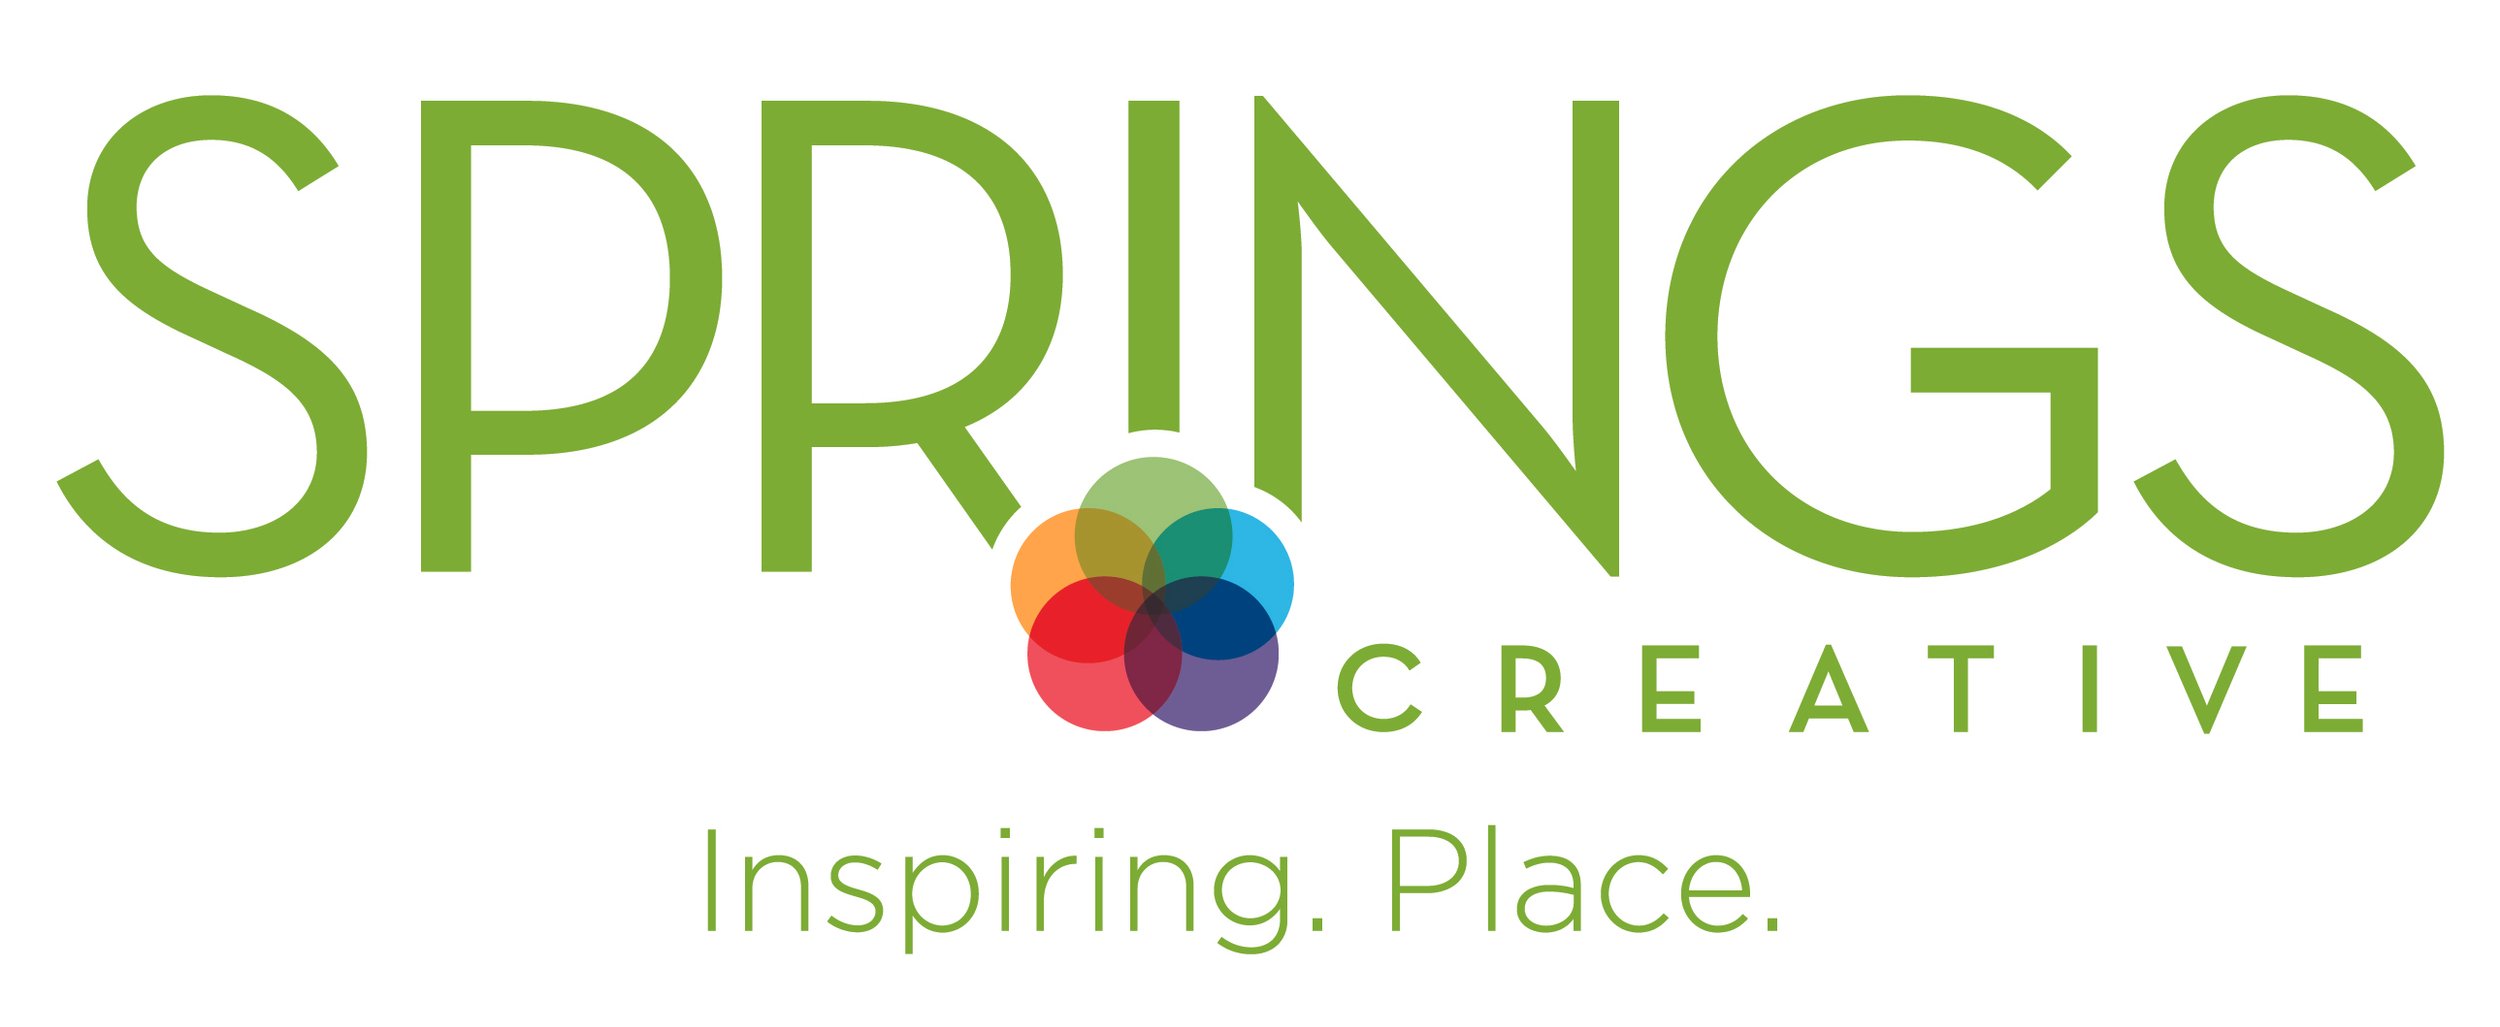 SpringsCreative-Logo2019-Tagline.jpg